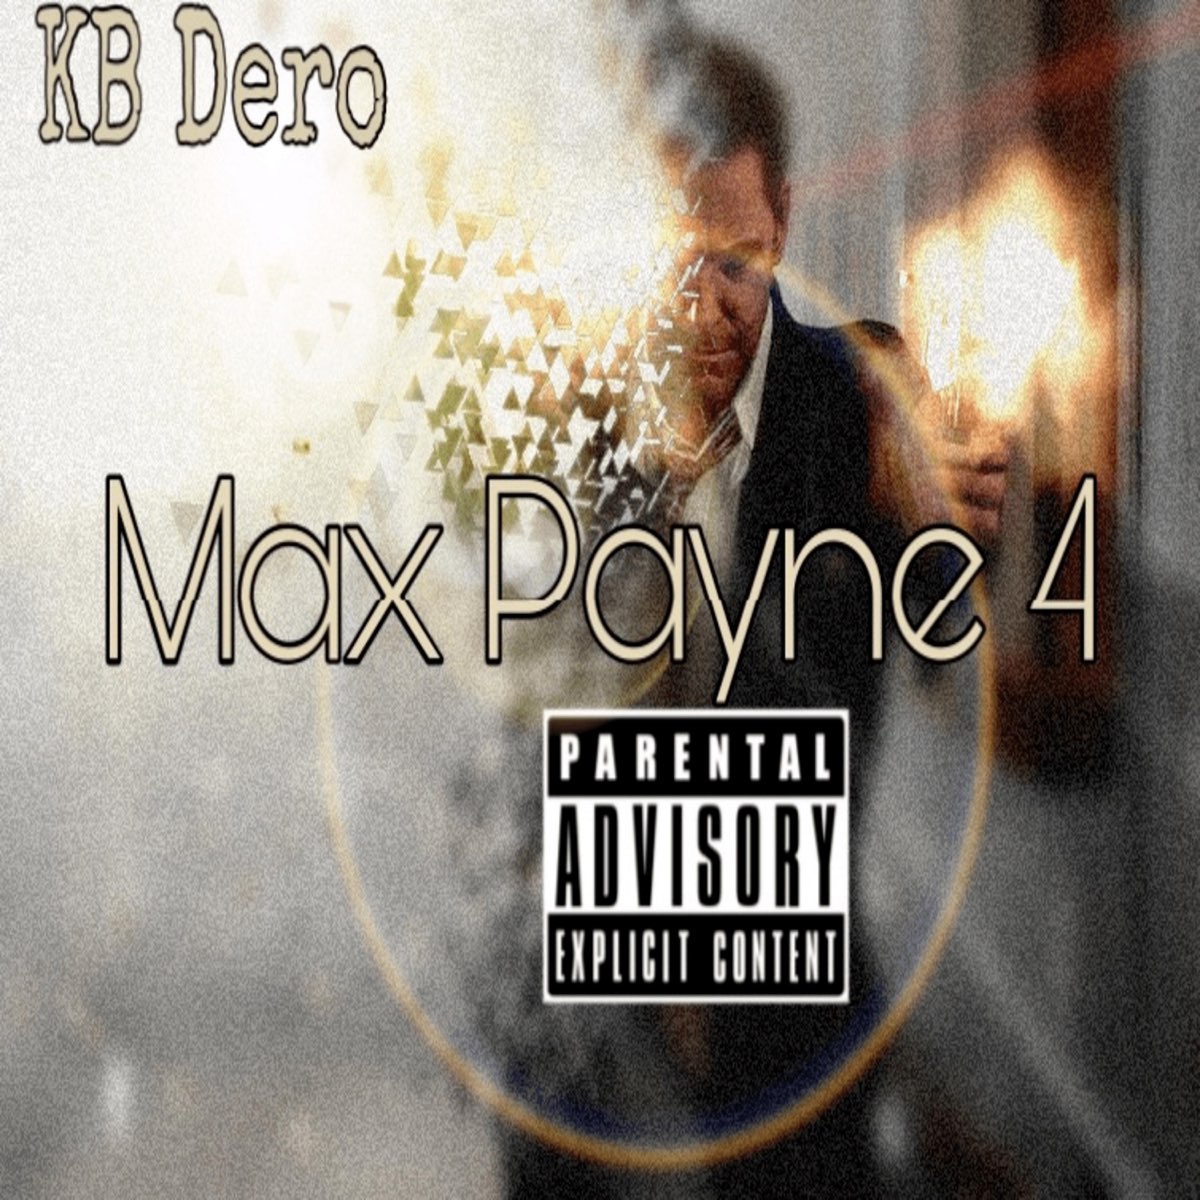 Max Payne 4 - Single - Album by KB Dero - Apple Music, max payne 4